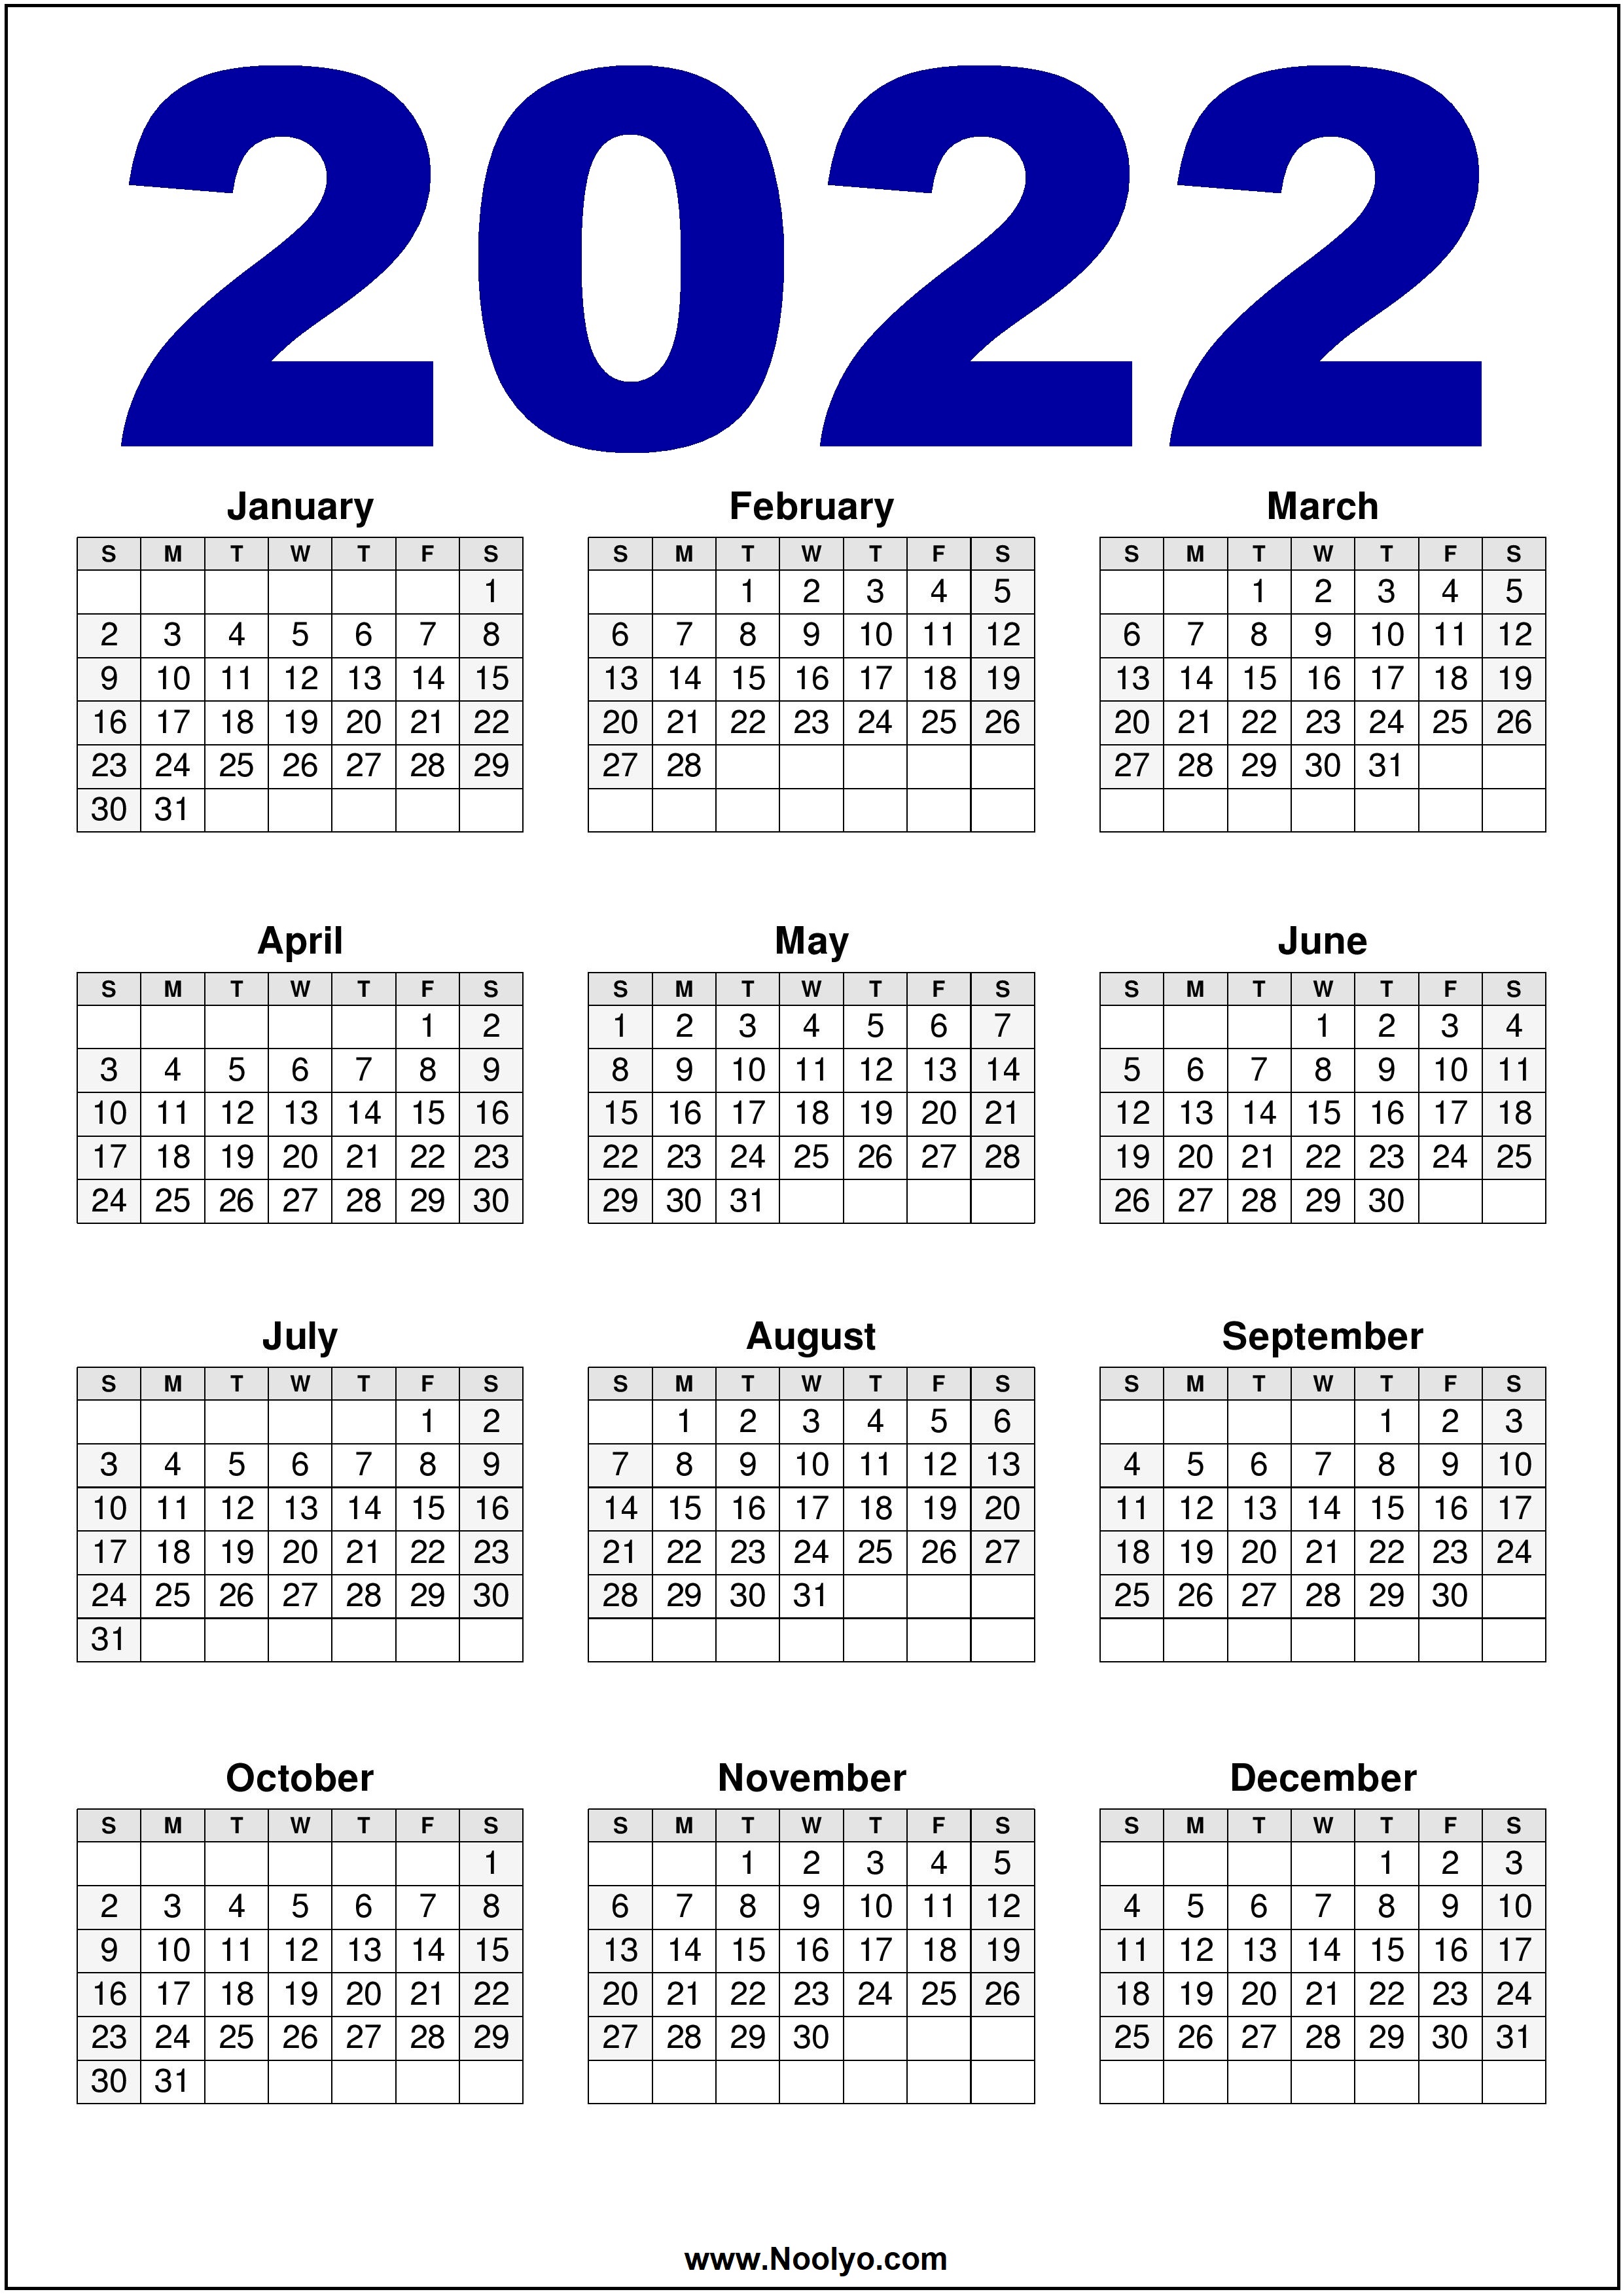 2022 calendar us printable download free noolyocom